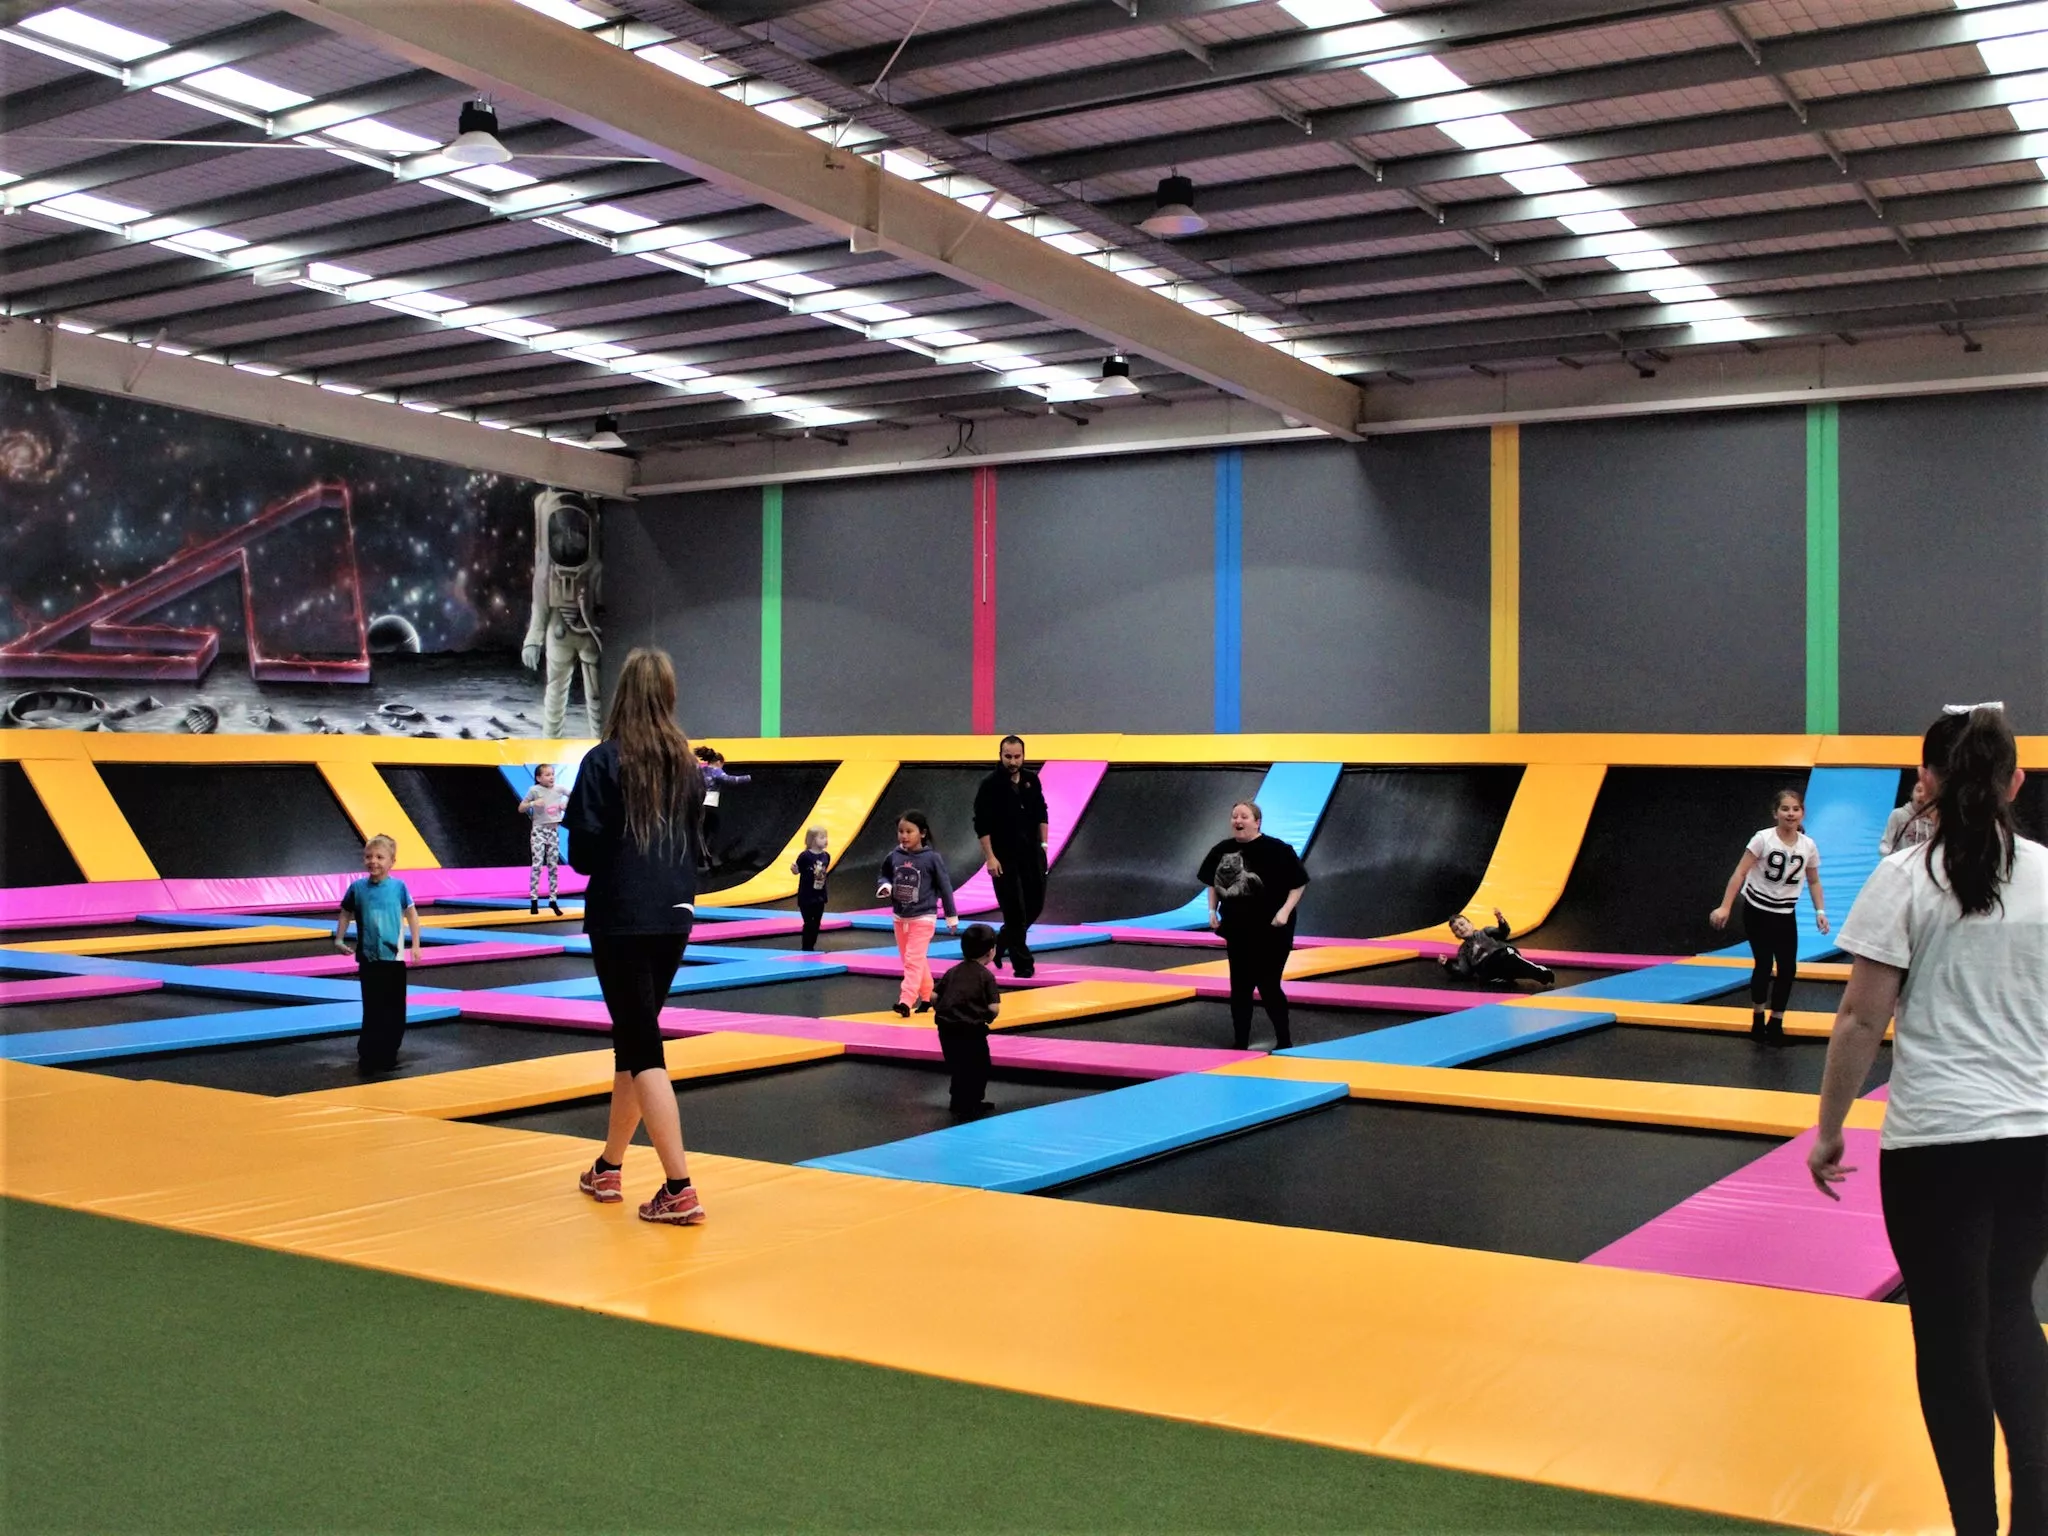 Airborn Indoor Trampoline Park in Australia, Australia and Oceania | Trampolining - Rated 3.6